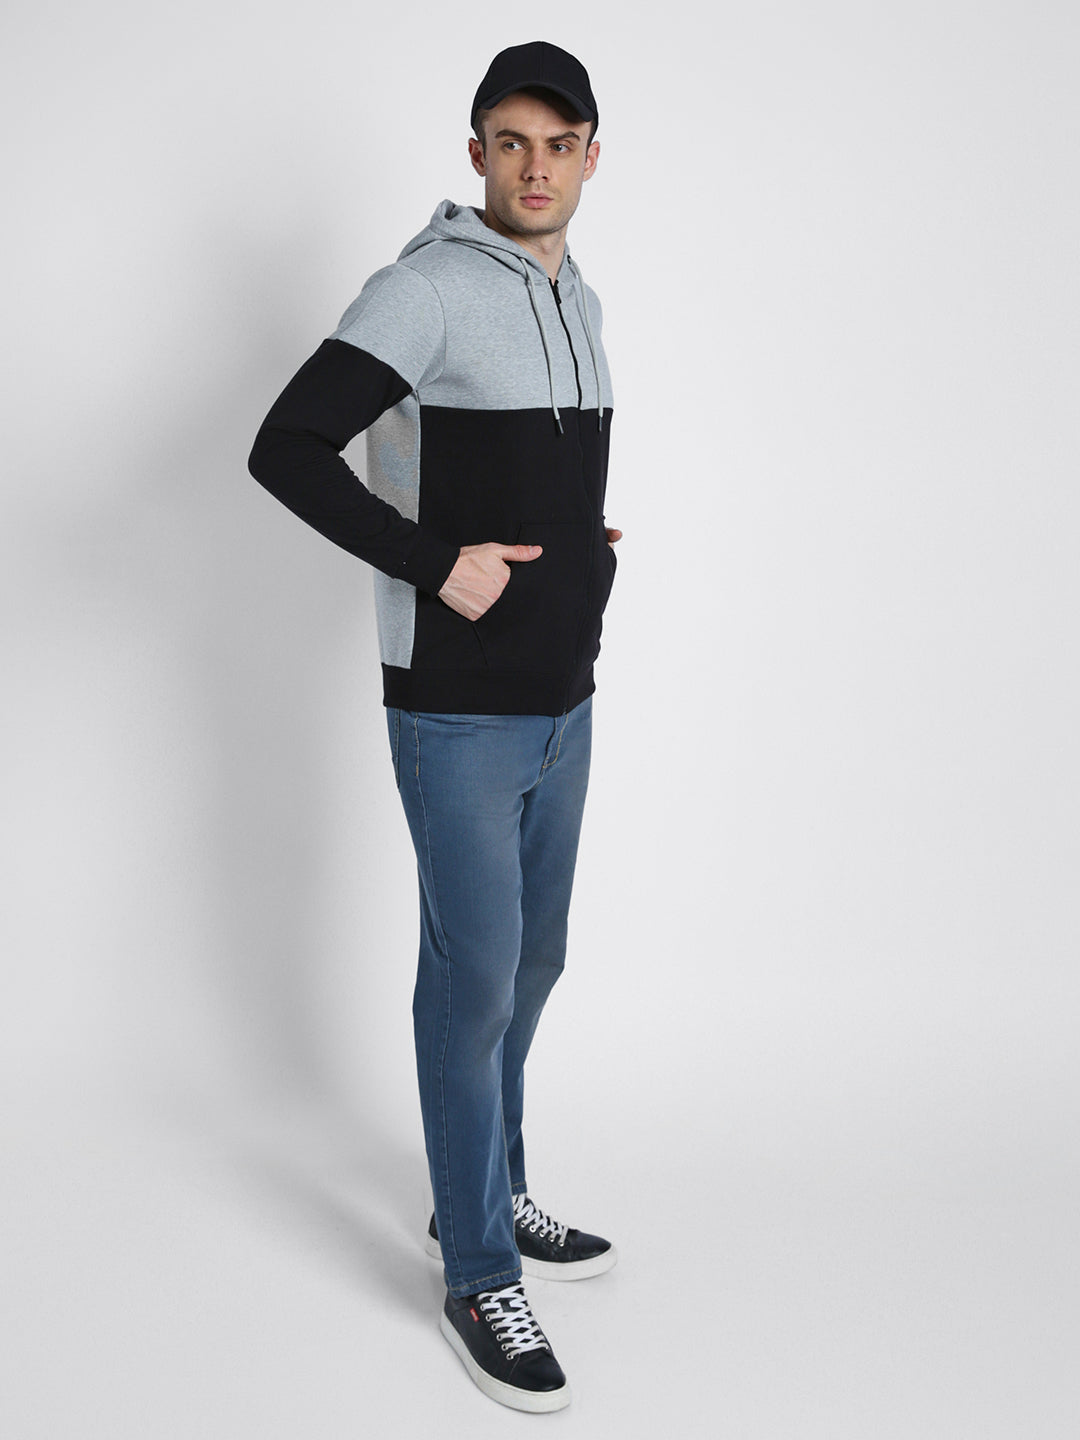 Dennis Lingo Men's Light Grey  Full Sleeves zipper hoodie Sweatshirt